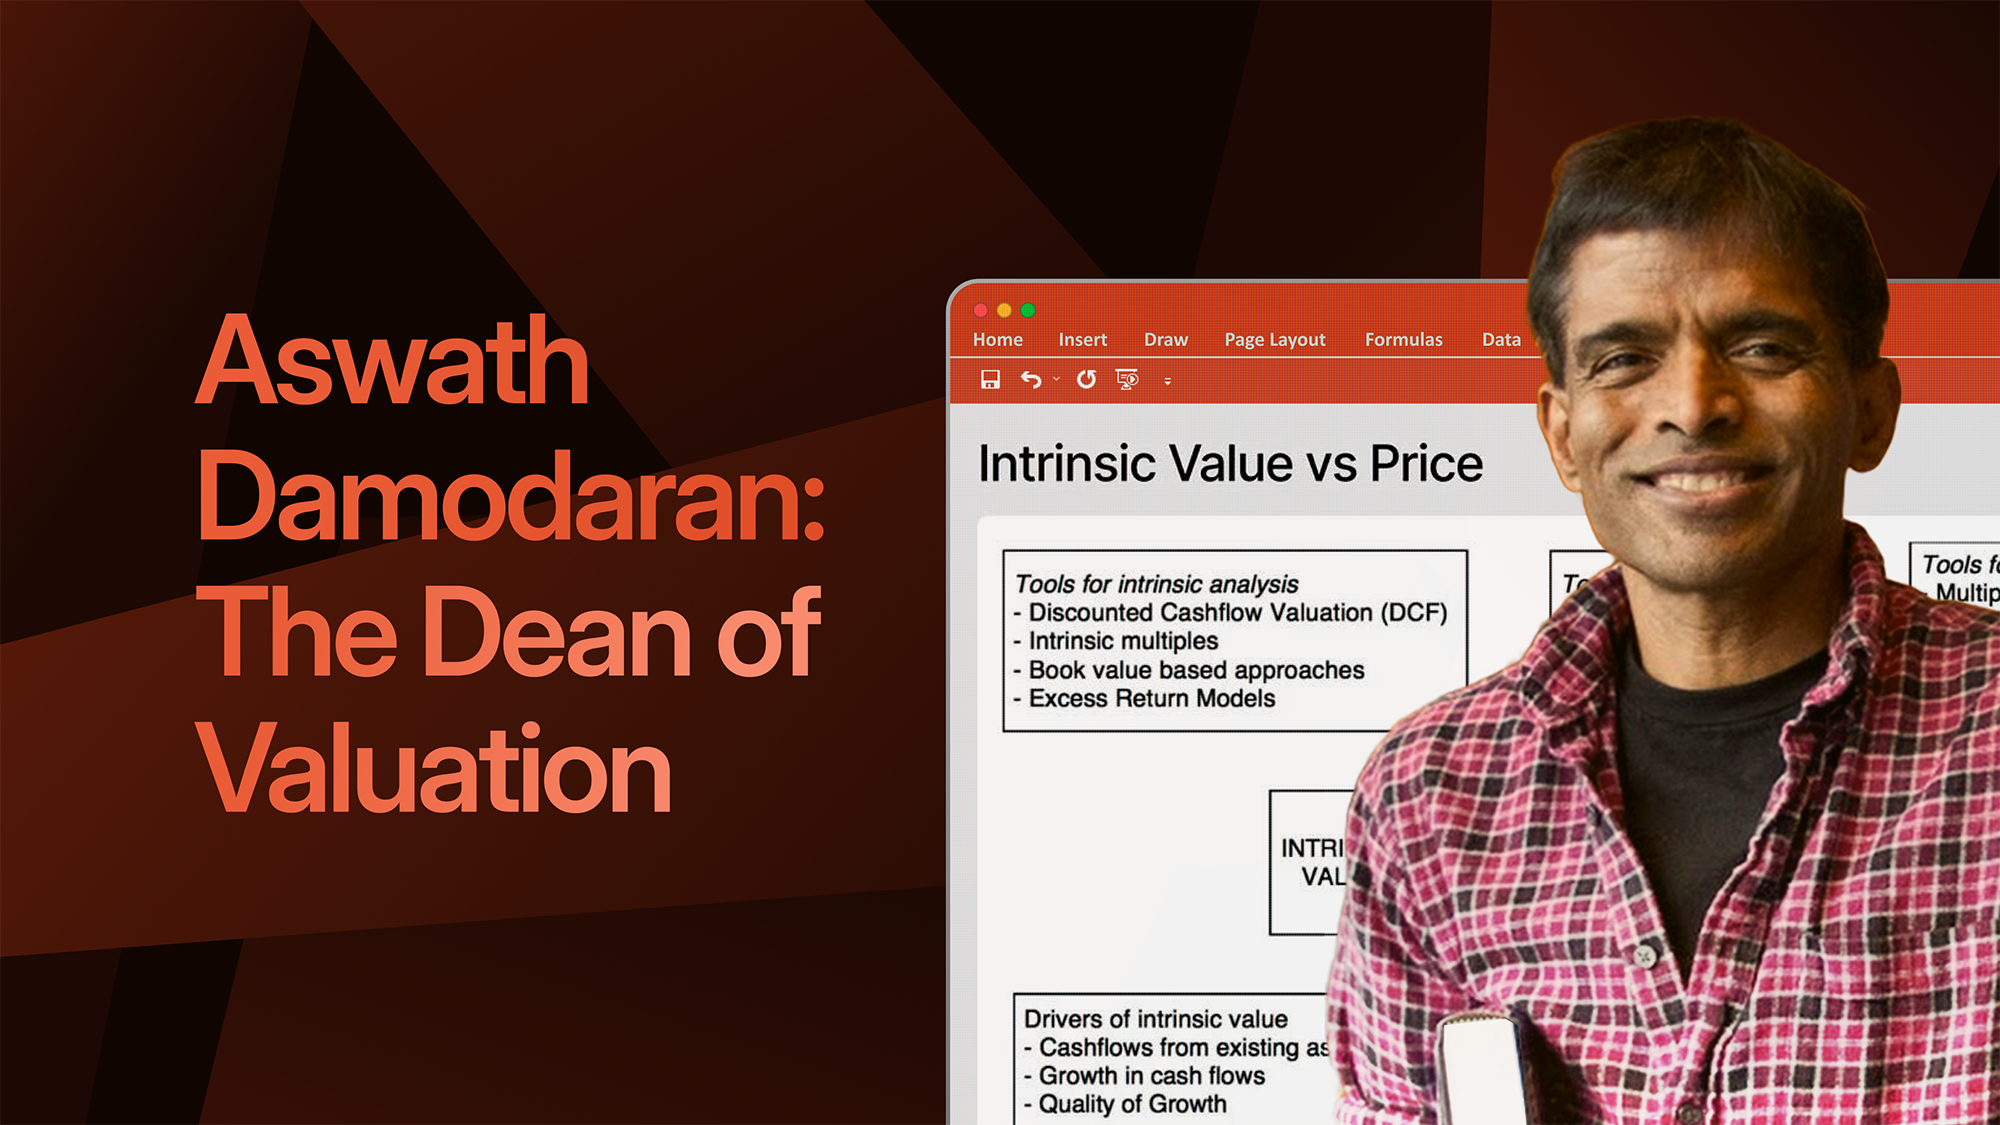 Value investing with Aswath Damodaran: Intrinsic Value vs Price